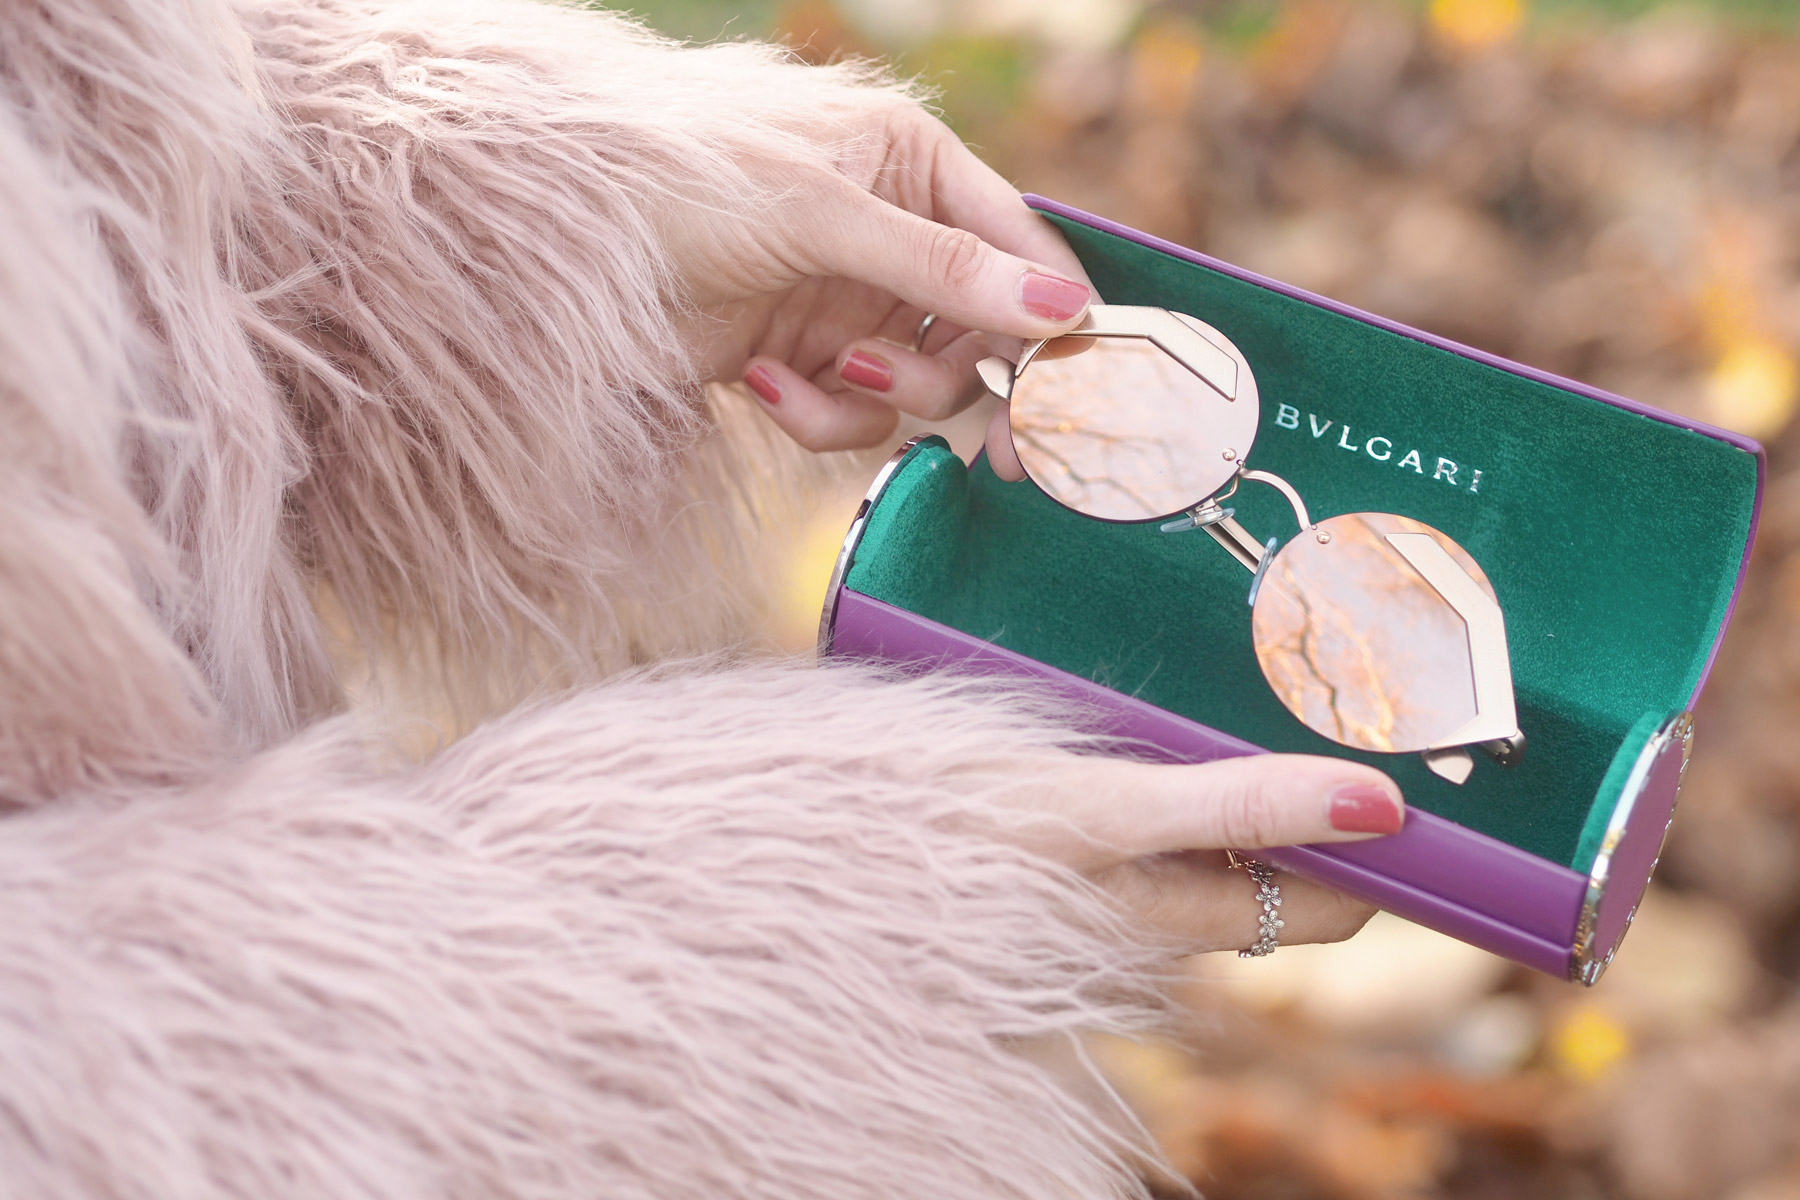 pink shaggy fur jacket | winter style | winter lookbook | Bulgari Serpenti pink mirror sunglasses | autumn fashion | fall style | lookbook